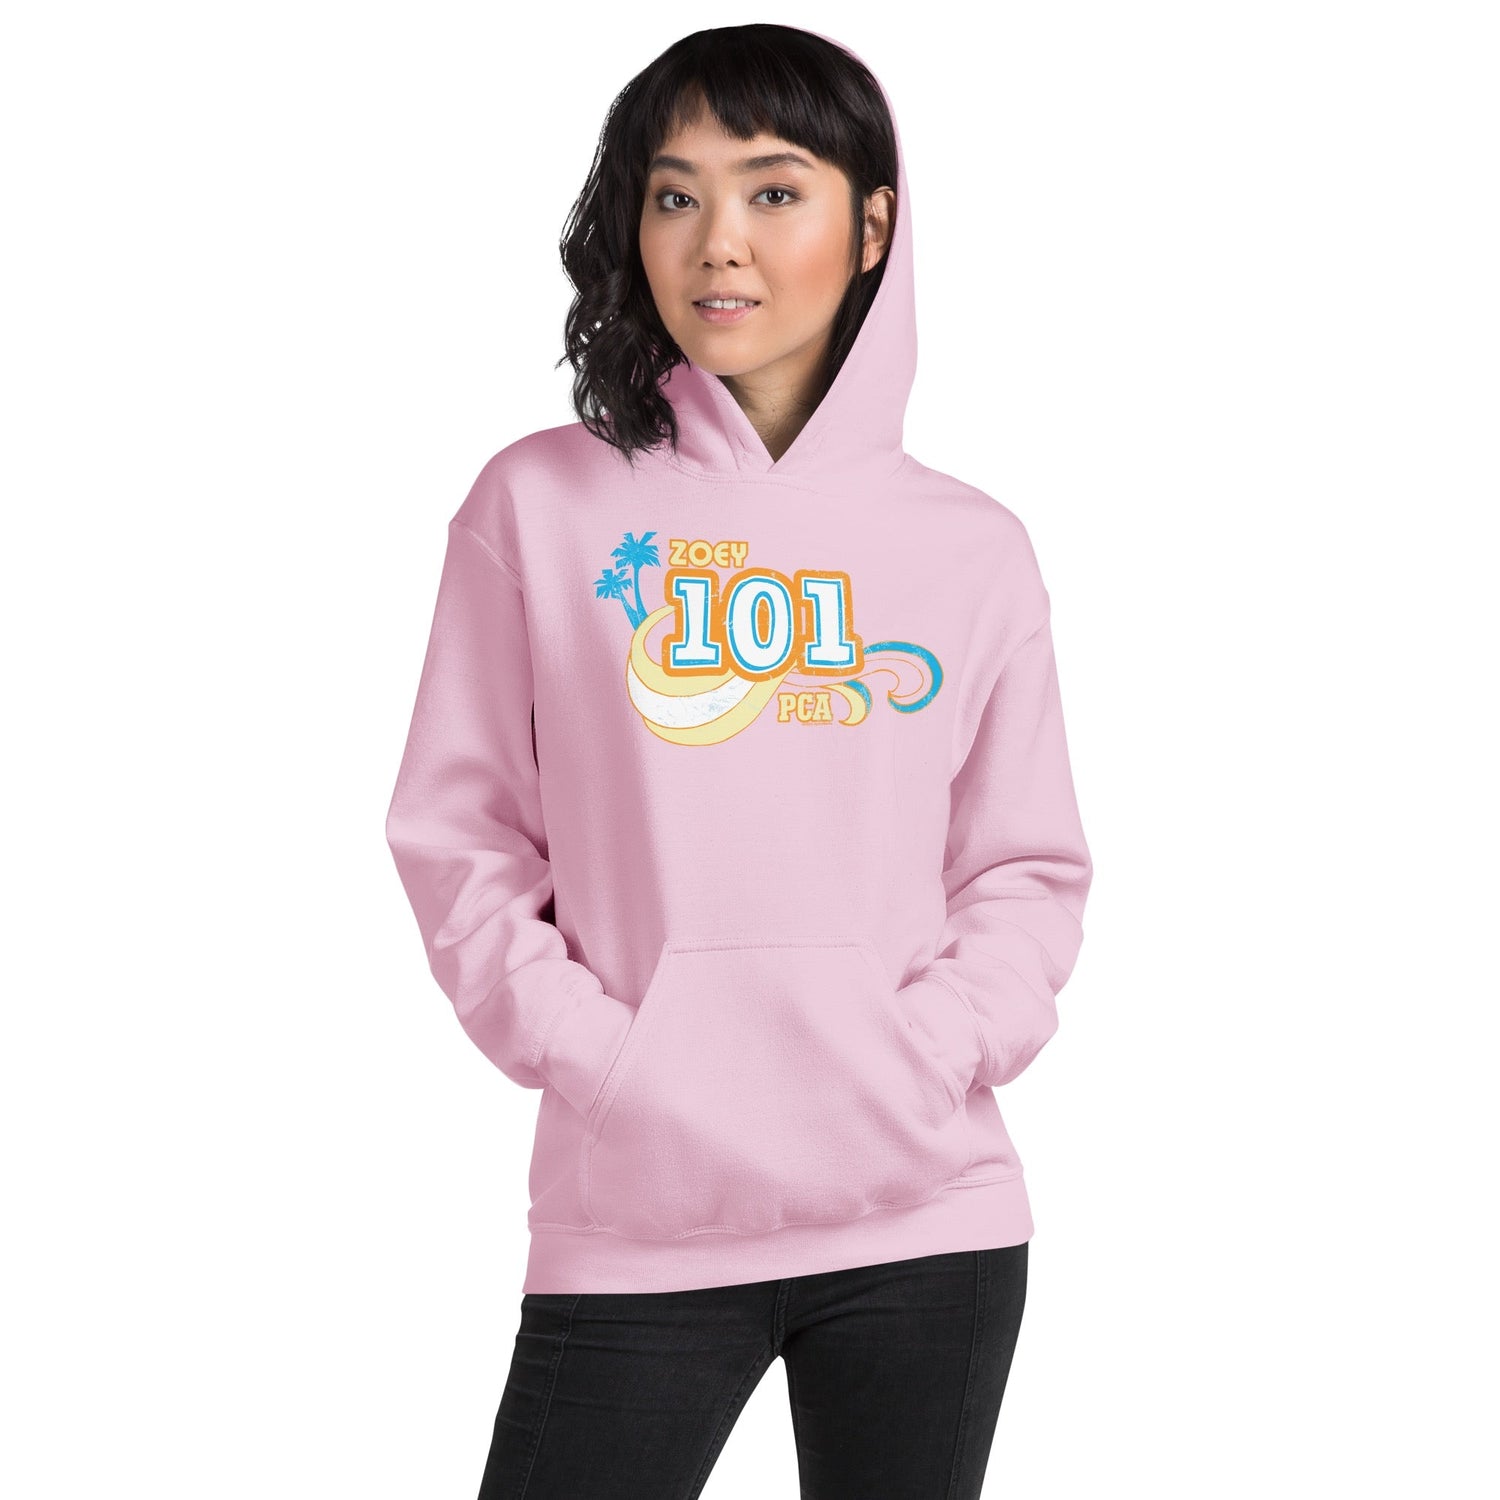 Zoey 101 PCA Adult Hooded Sweatshirt - Paramount Shop